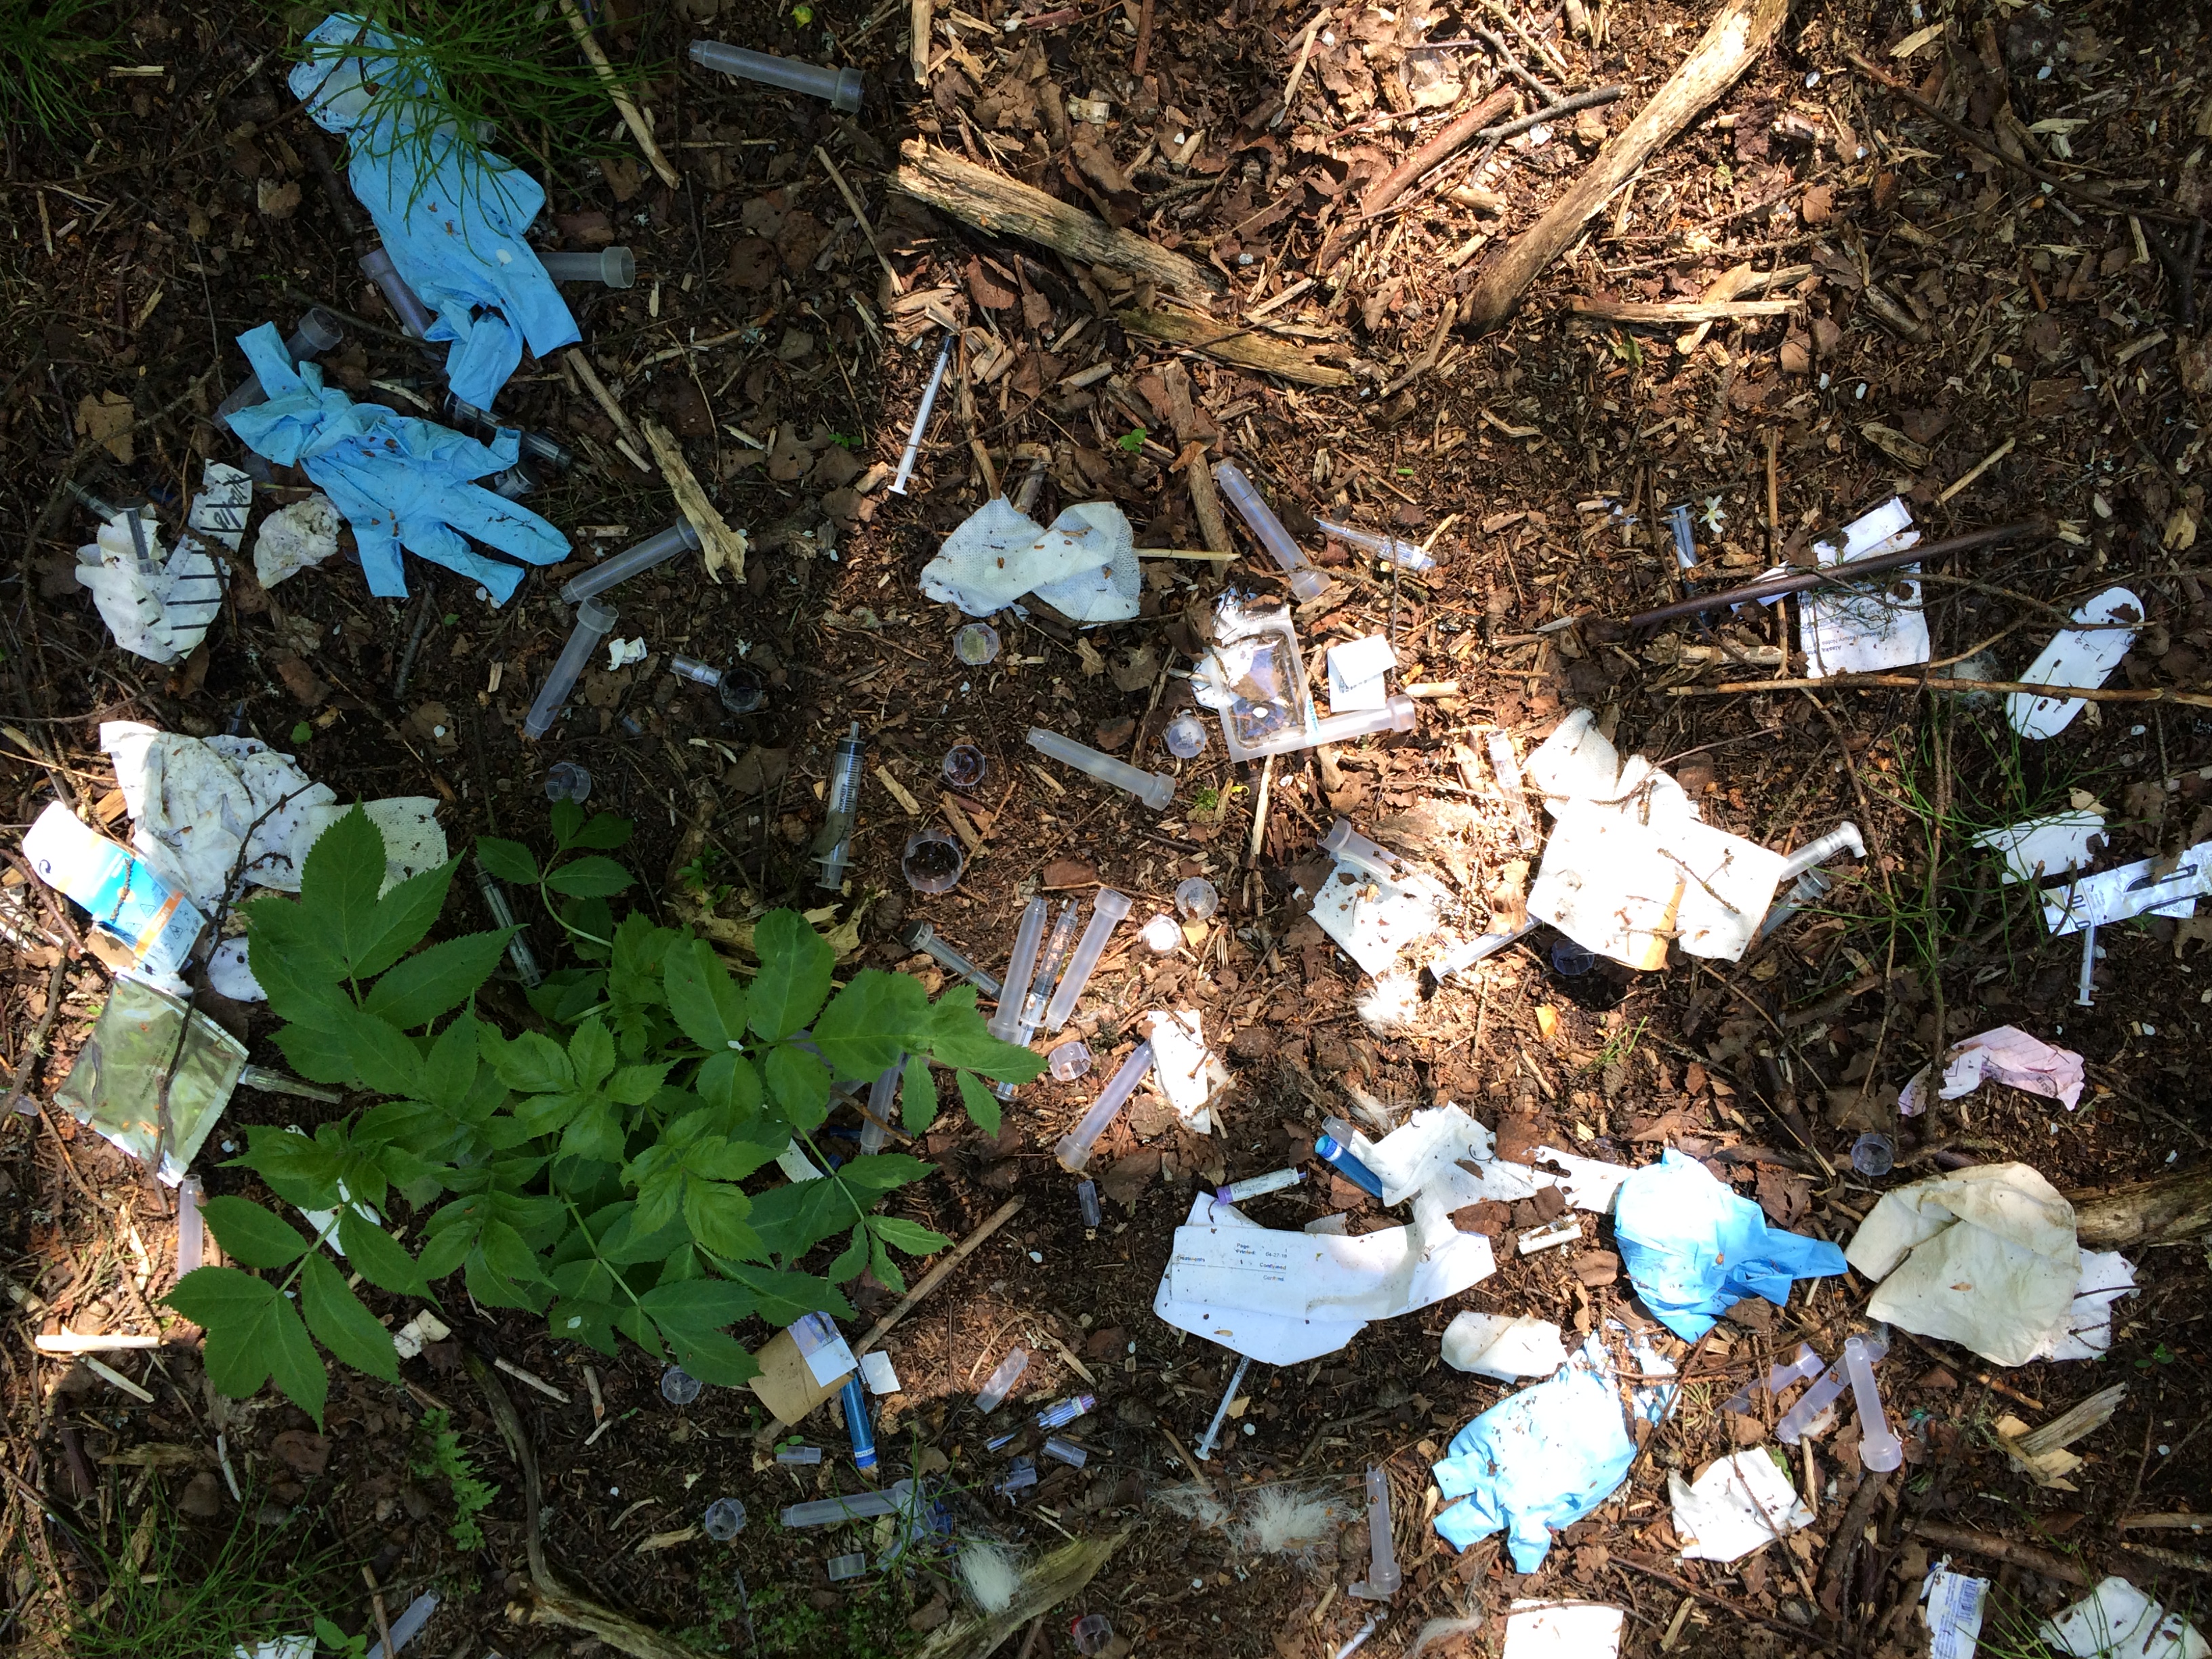 Trash near an abandoned camp site, including used needles. (Photo courtesy Russ Webb)